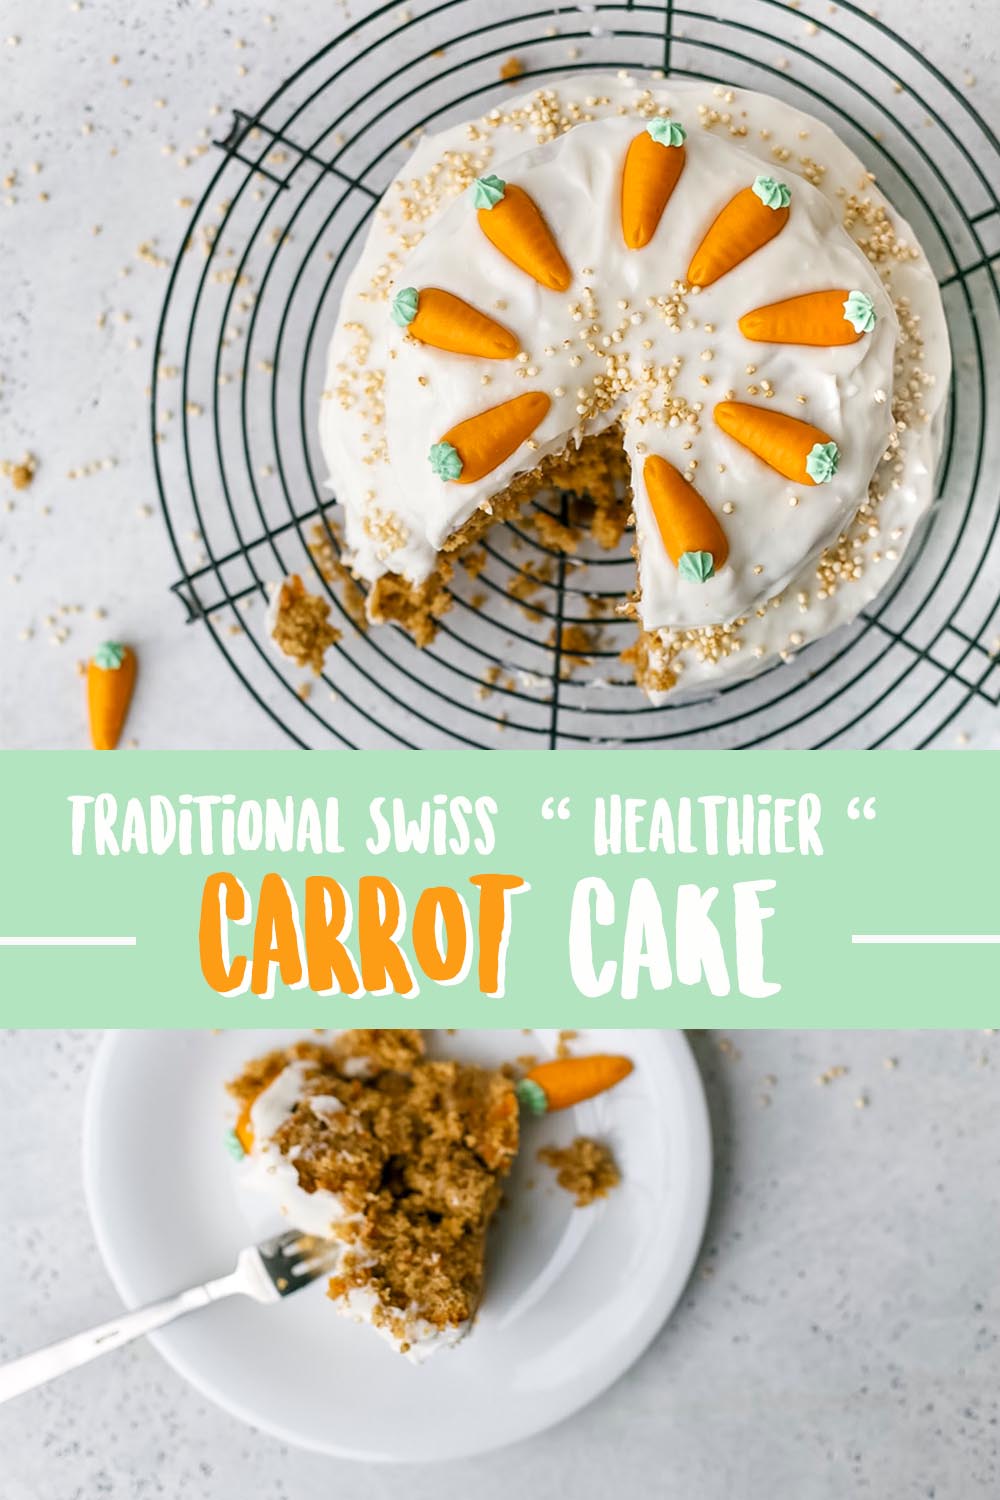 Healthy vegan swiss carrot cake